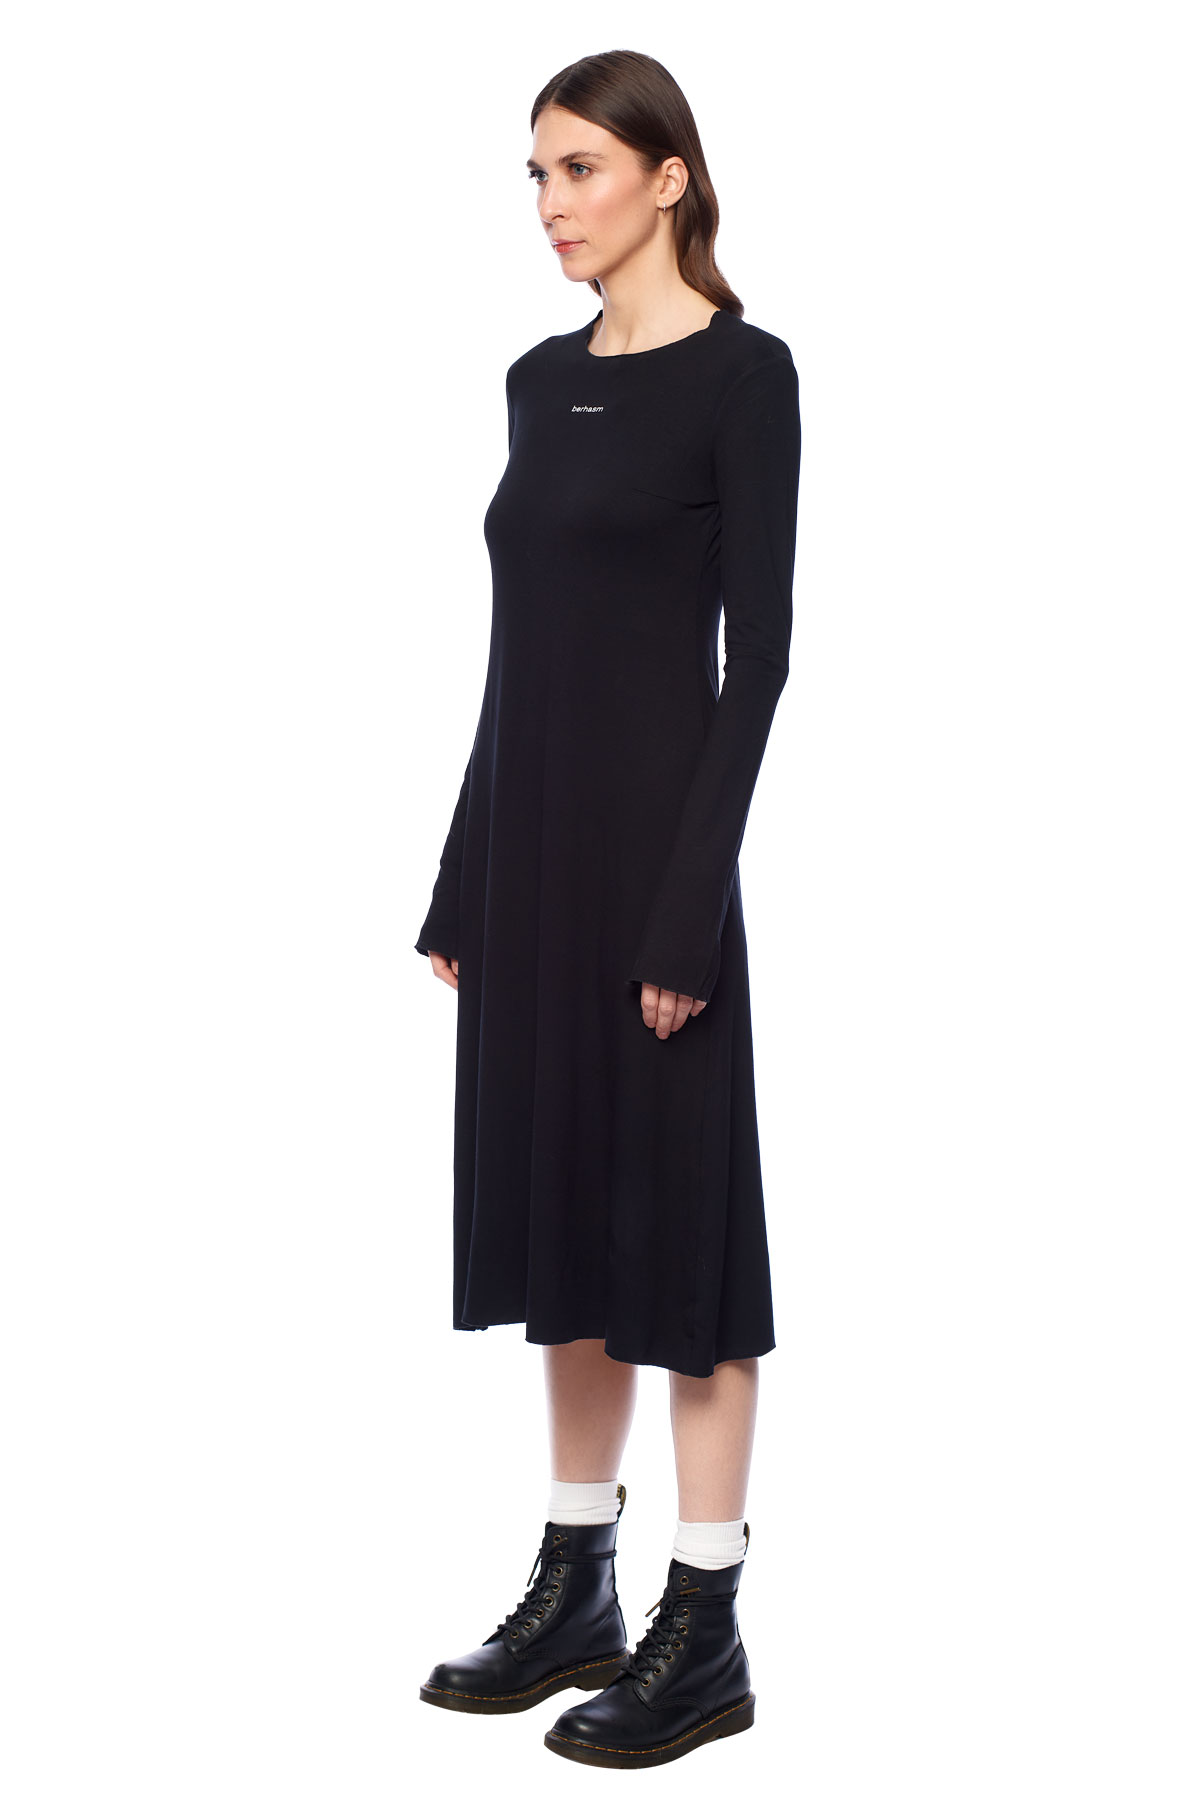 Black dress (petite robe noire)